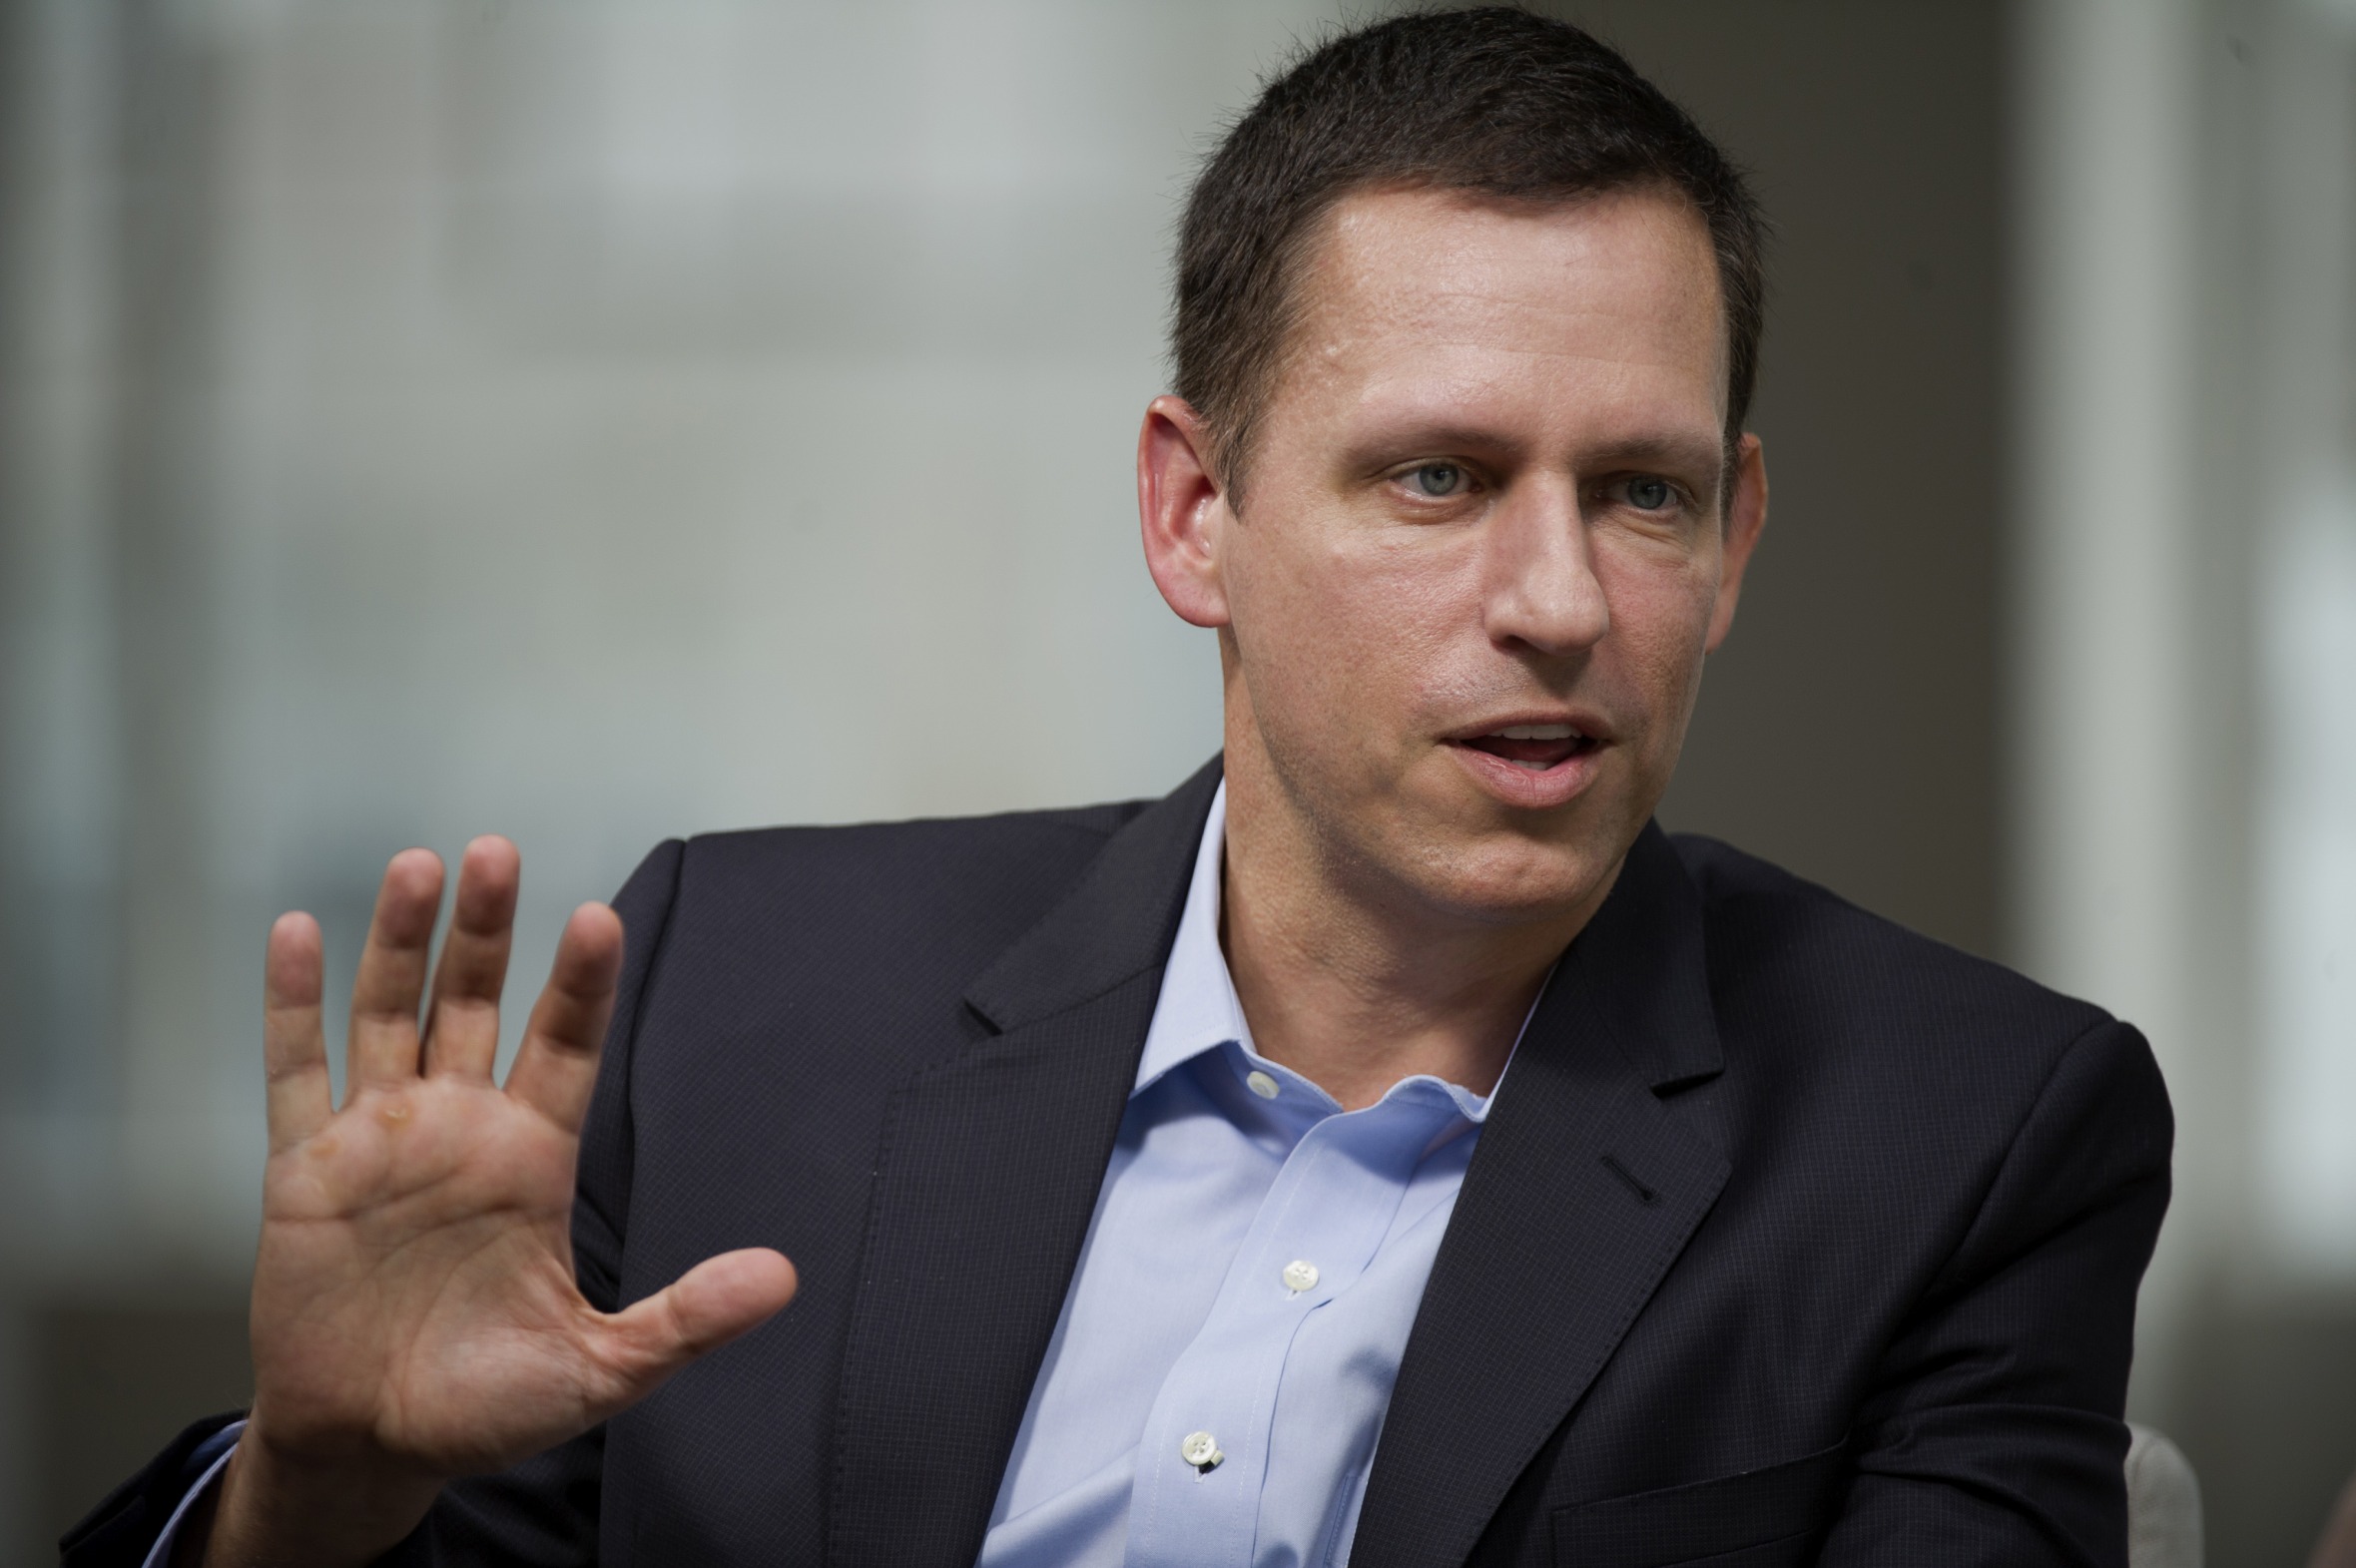 Peter Thiel : FBI, CIA should probe Google over China links - The ...